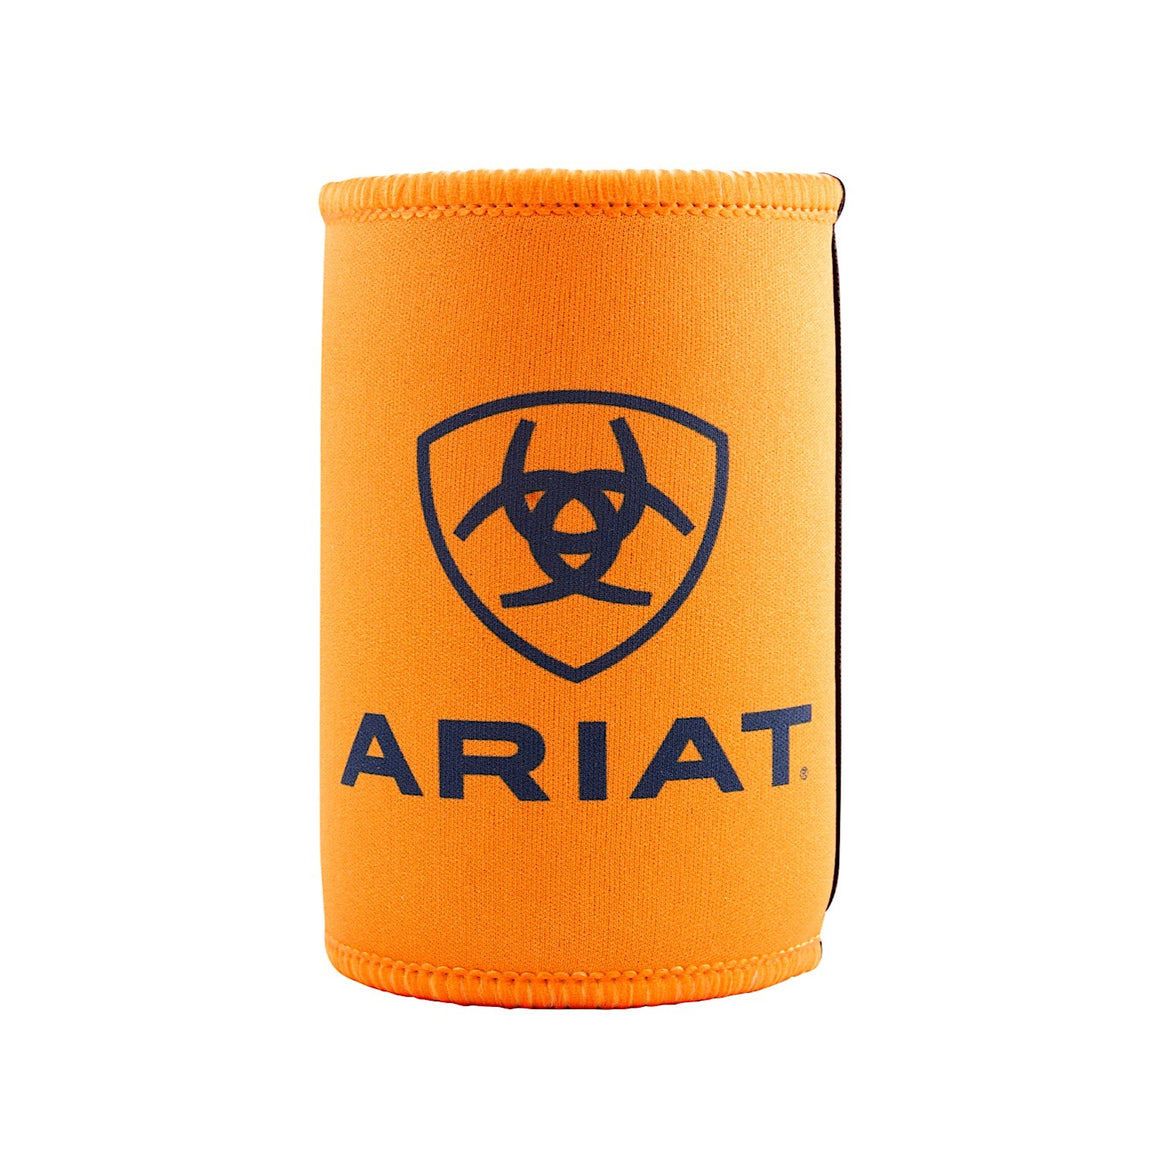 Ariat Stubby Cooler Orange/Navy